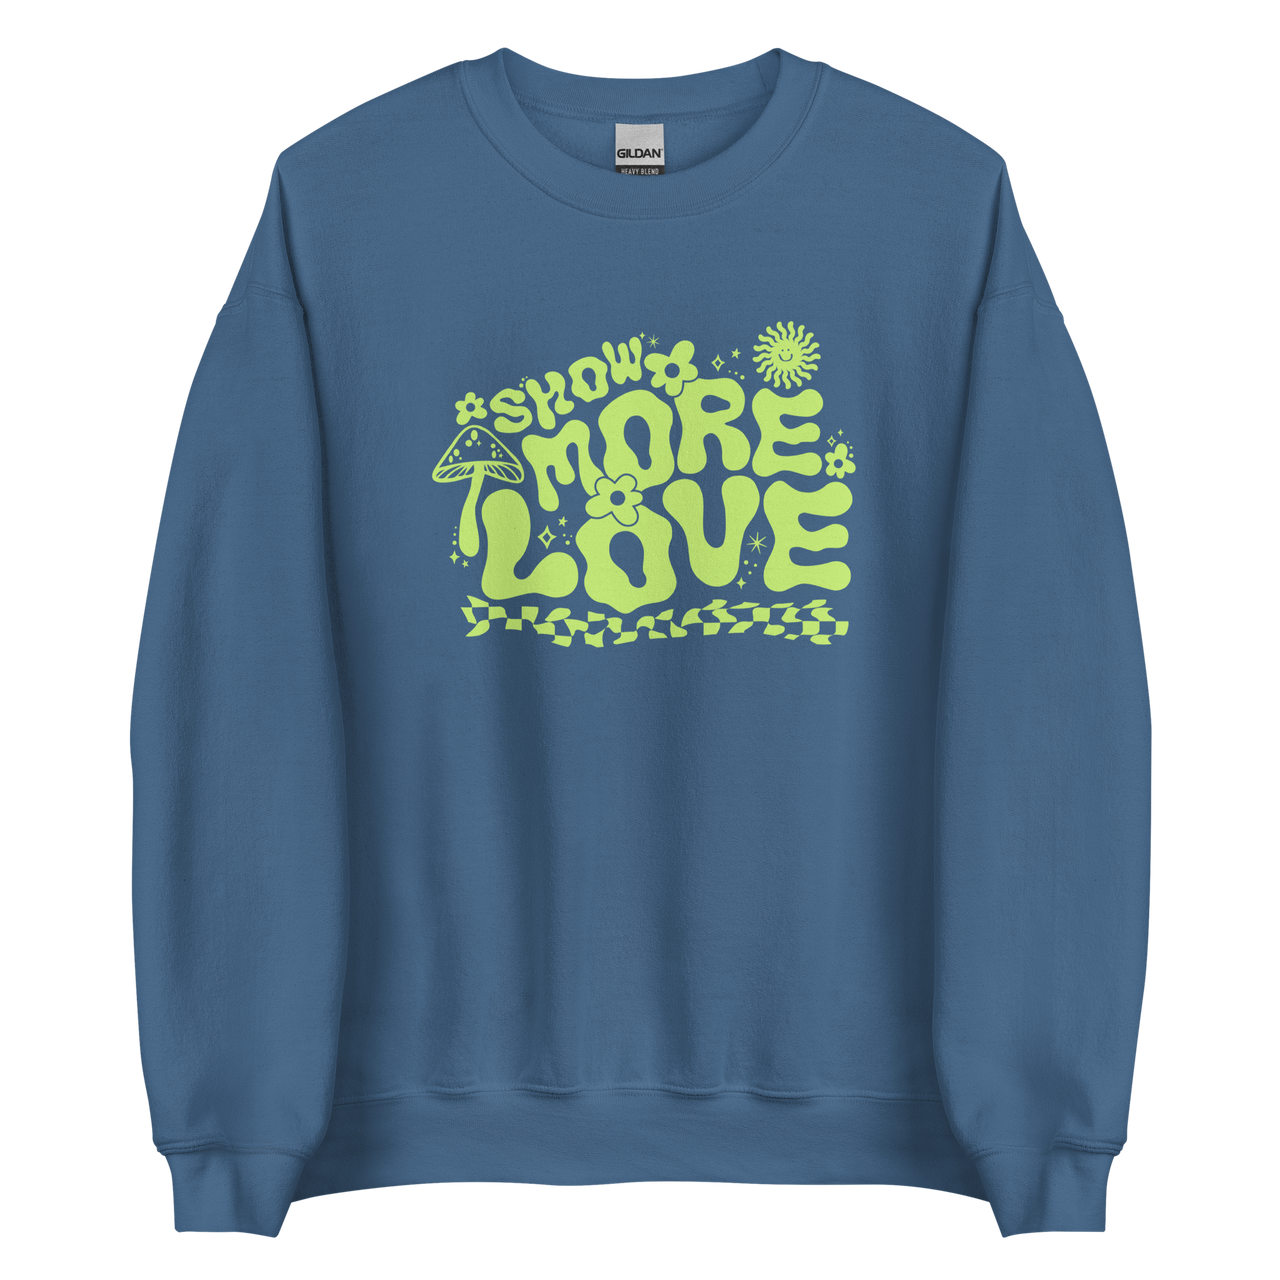 Show More Love Crewneck Sweatshirt